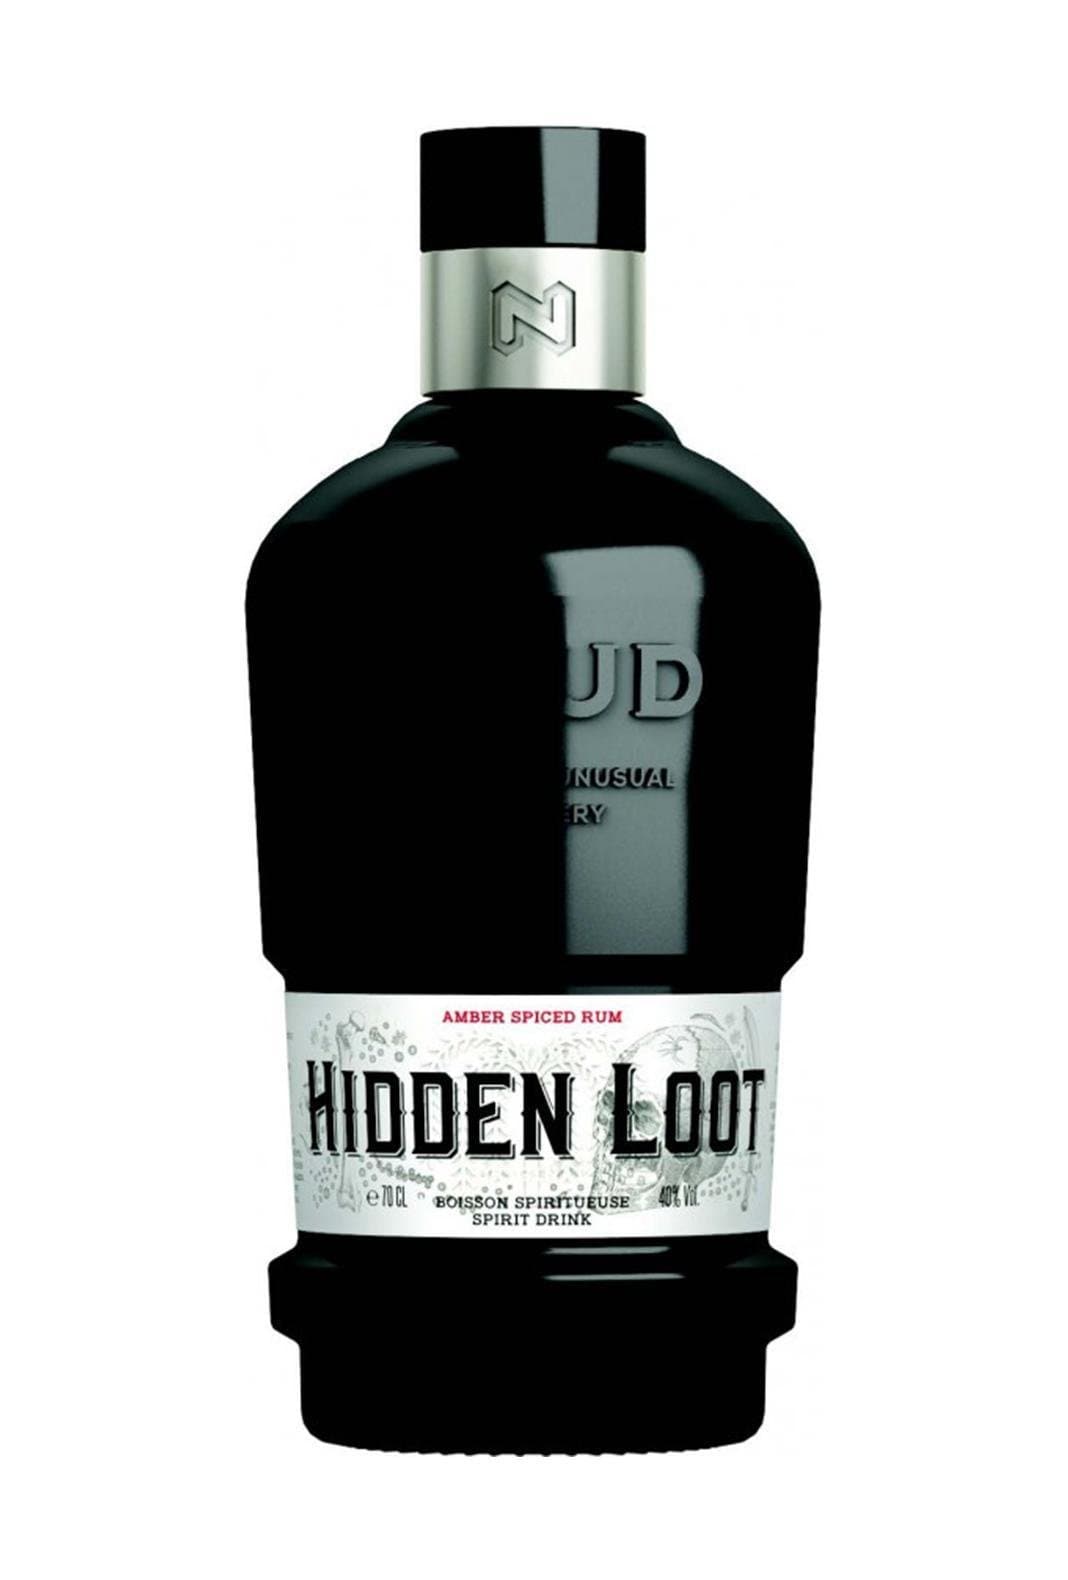 Naud Hidden Loot Spiced Rum 40% 700ml | Rum | Shop online at Spirits of France